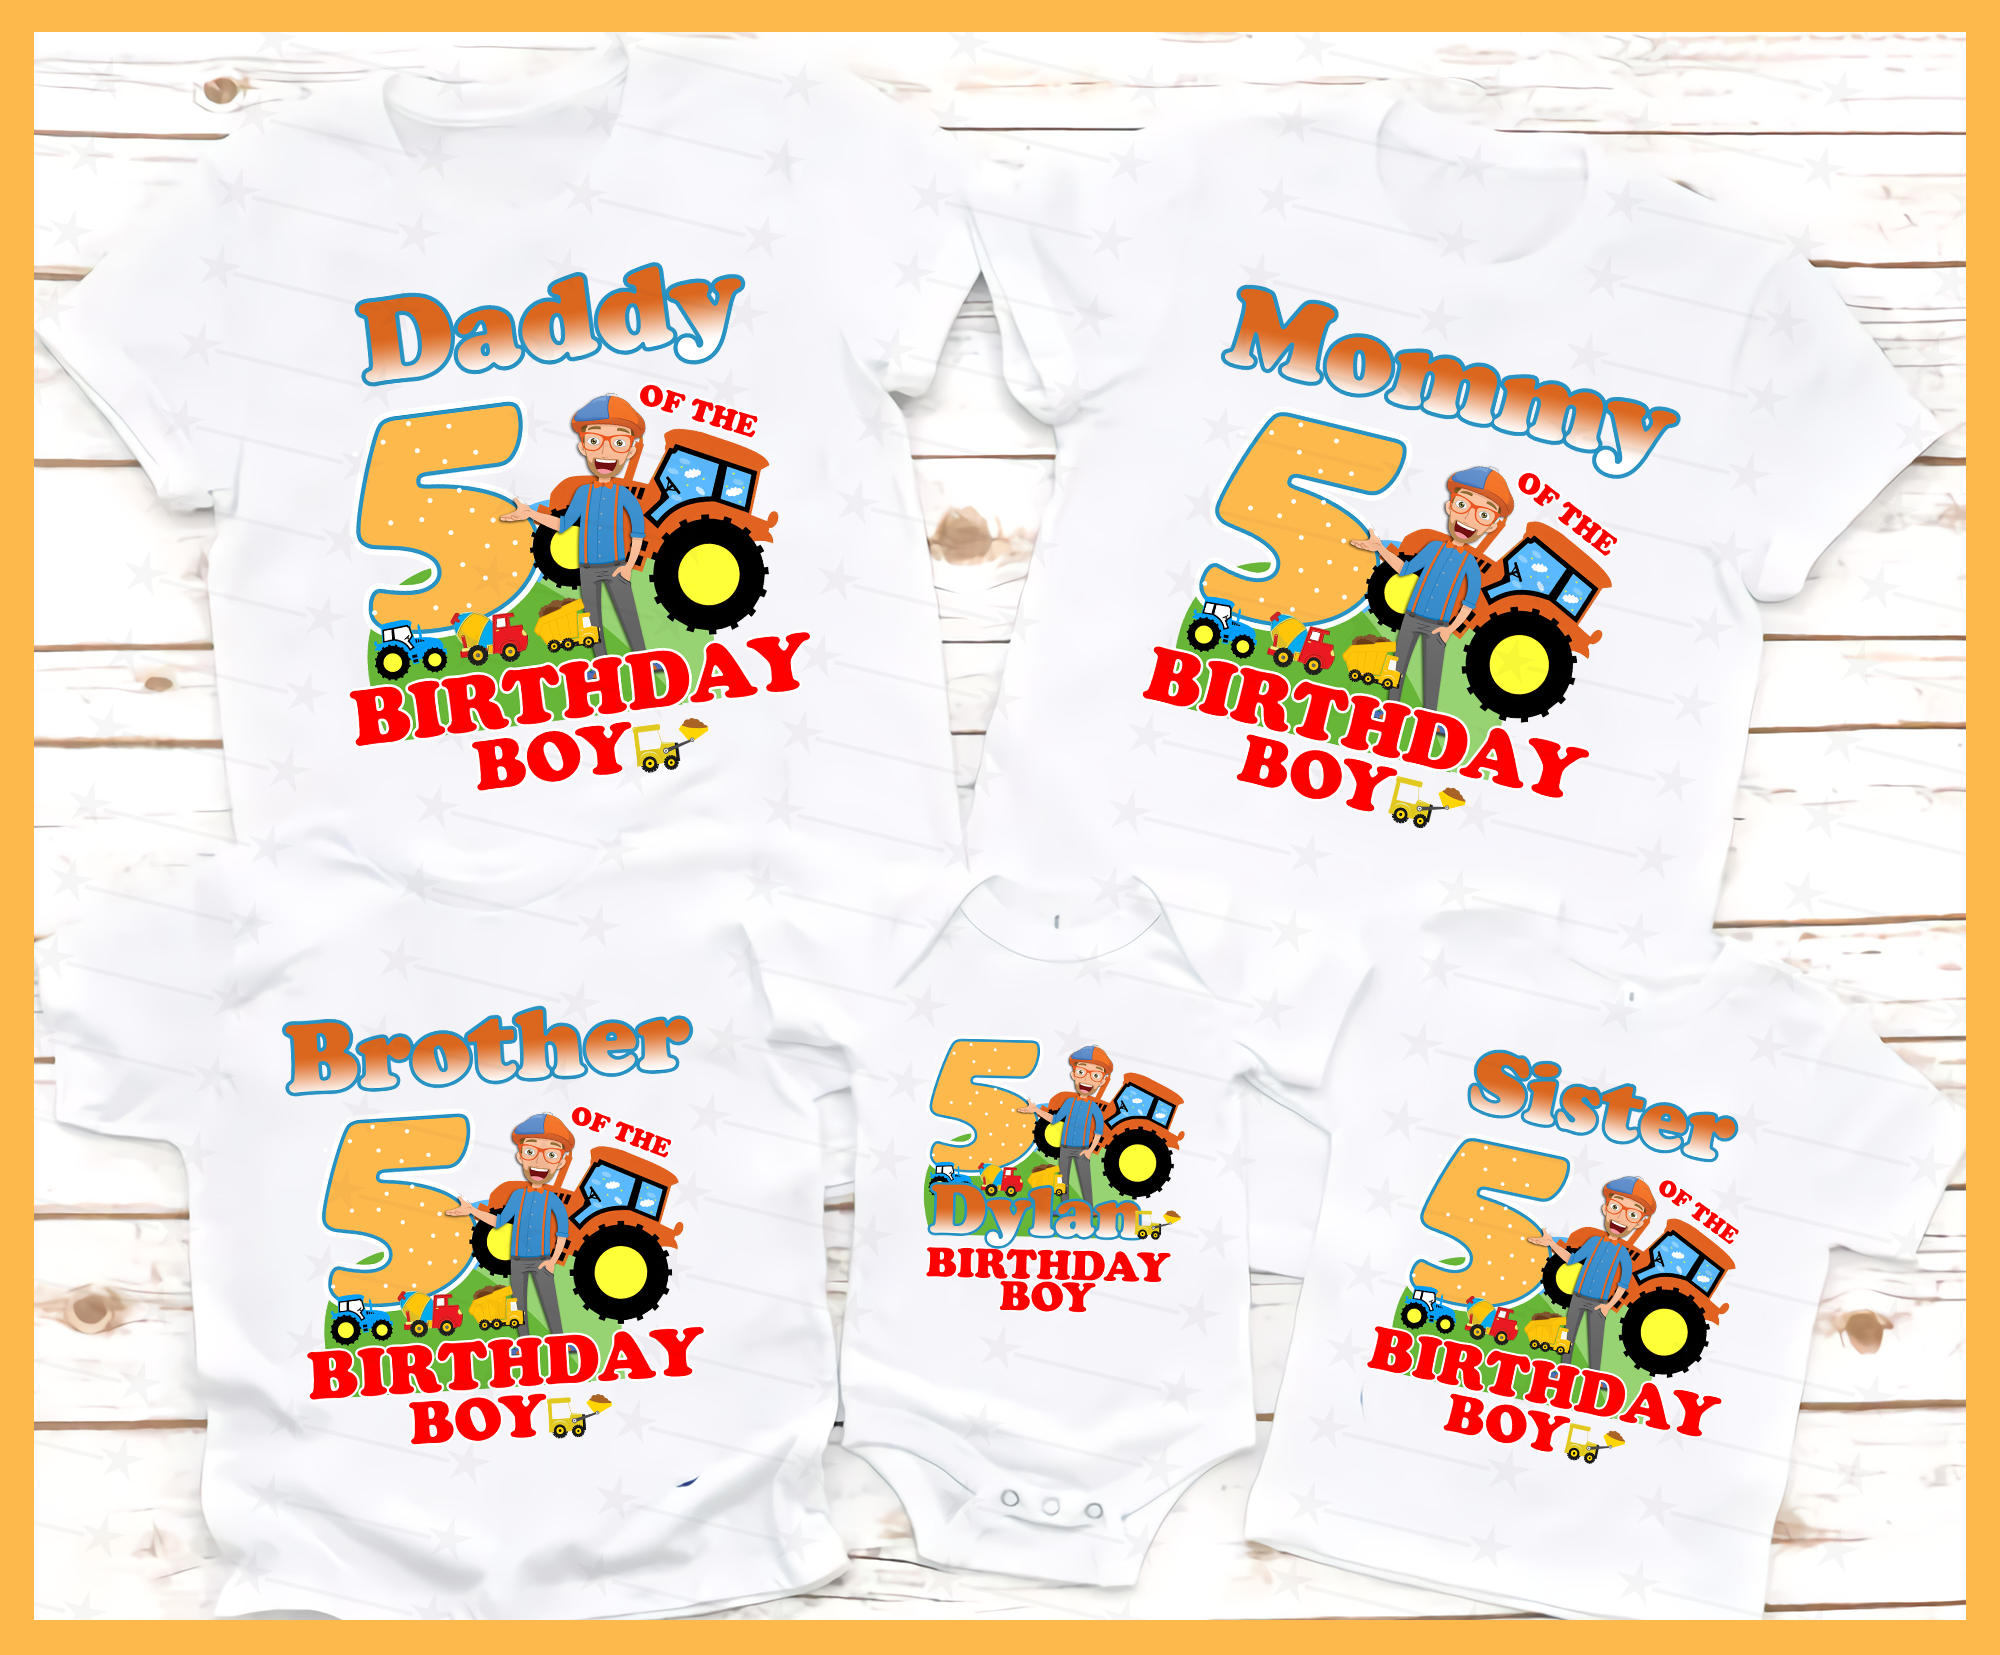 Personalized Blippi Birthday Shirts, Family Blippi shirts, Custom Blippi birthday Theme Shirts Set, Matching Family Party Shirts